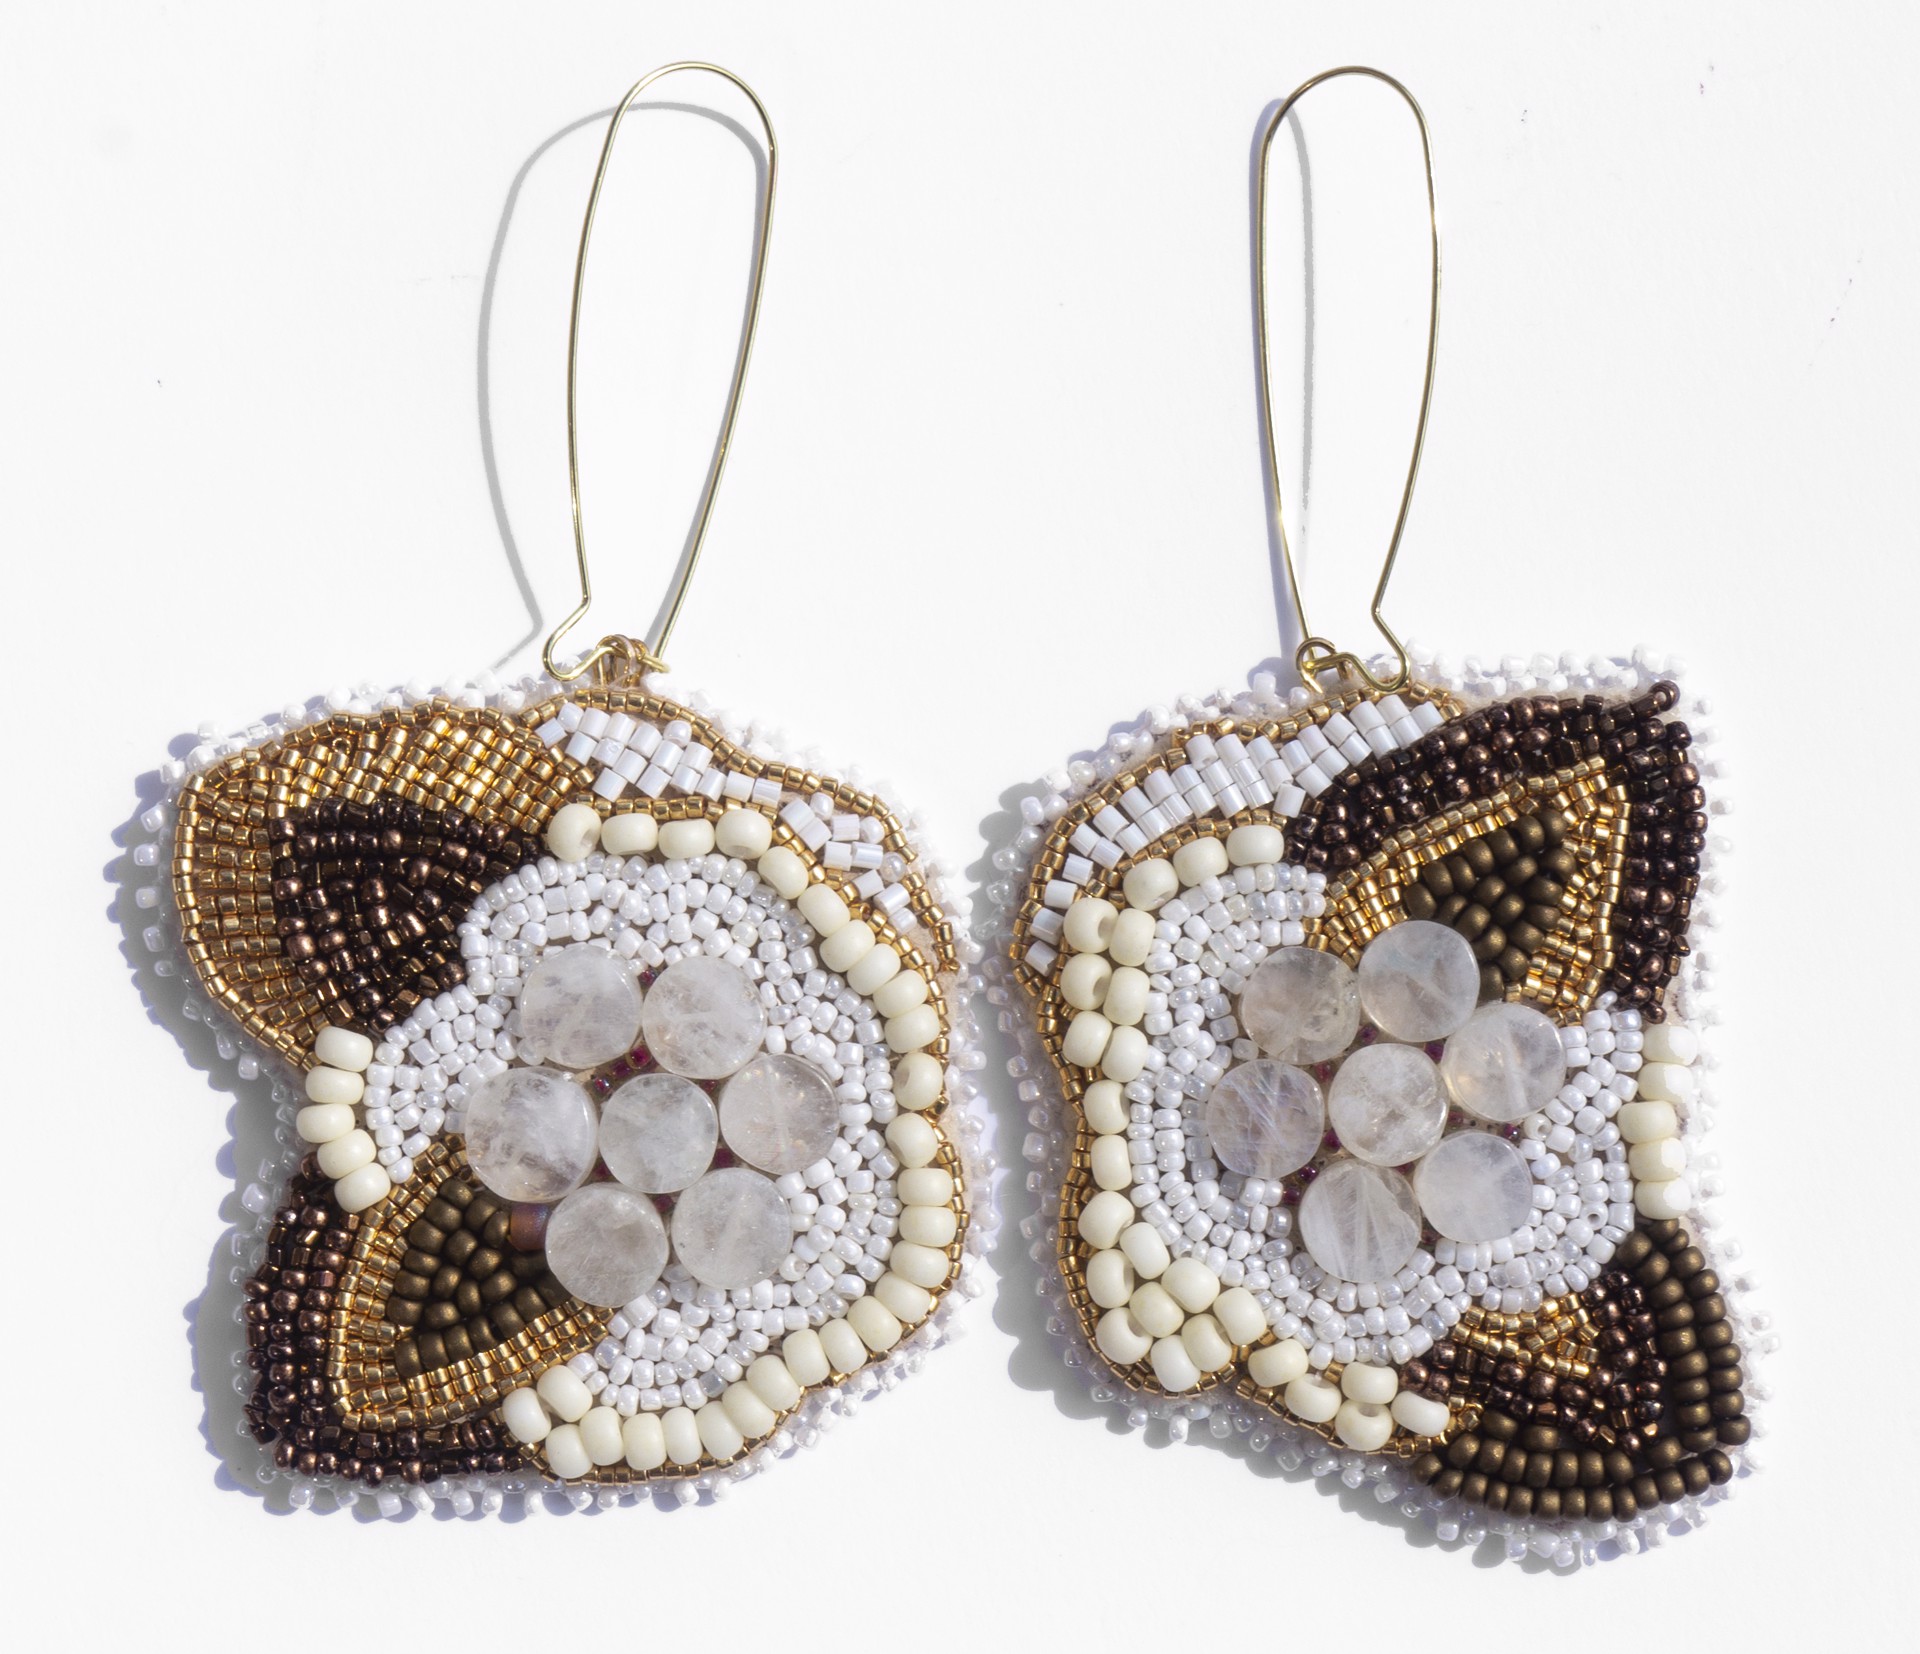 Beaded Floral Earrings by Hattie Lee Mendoza